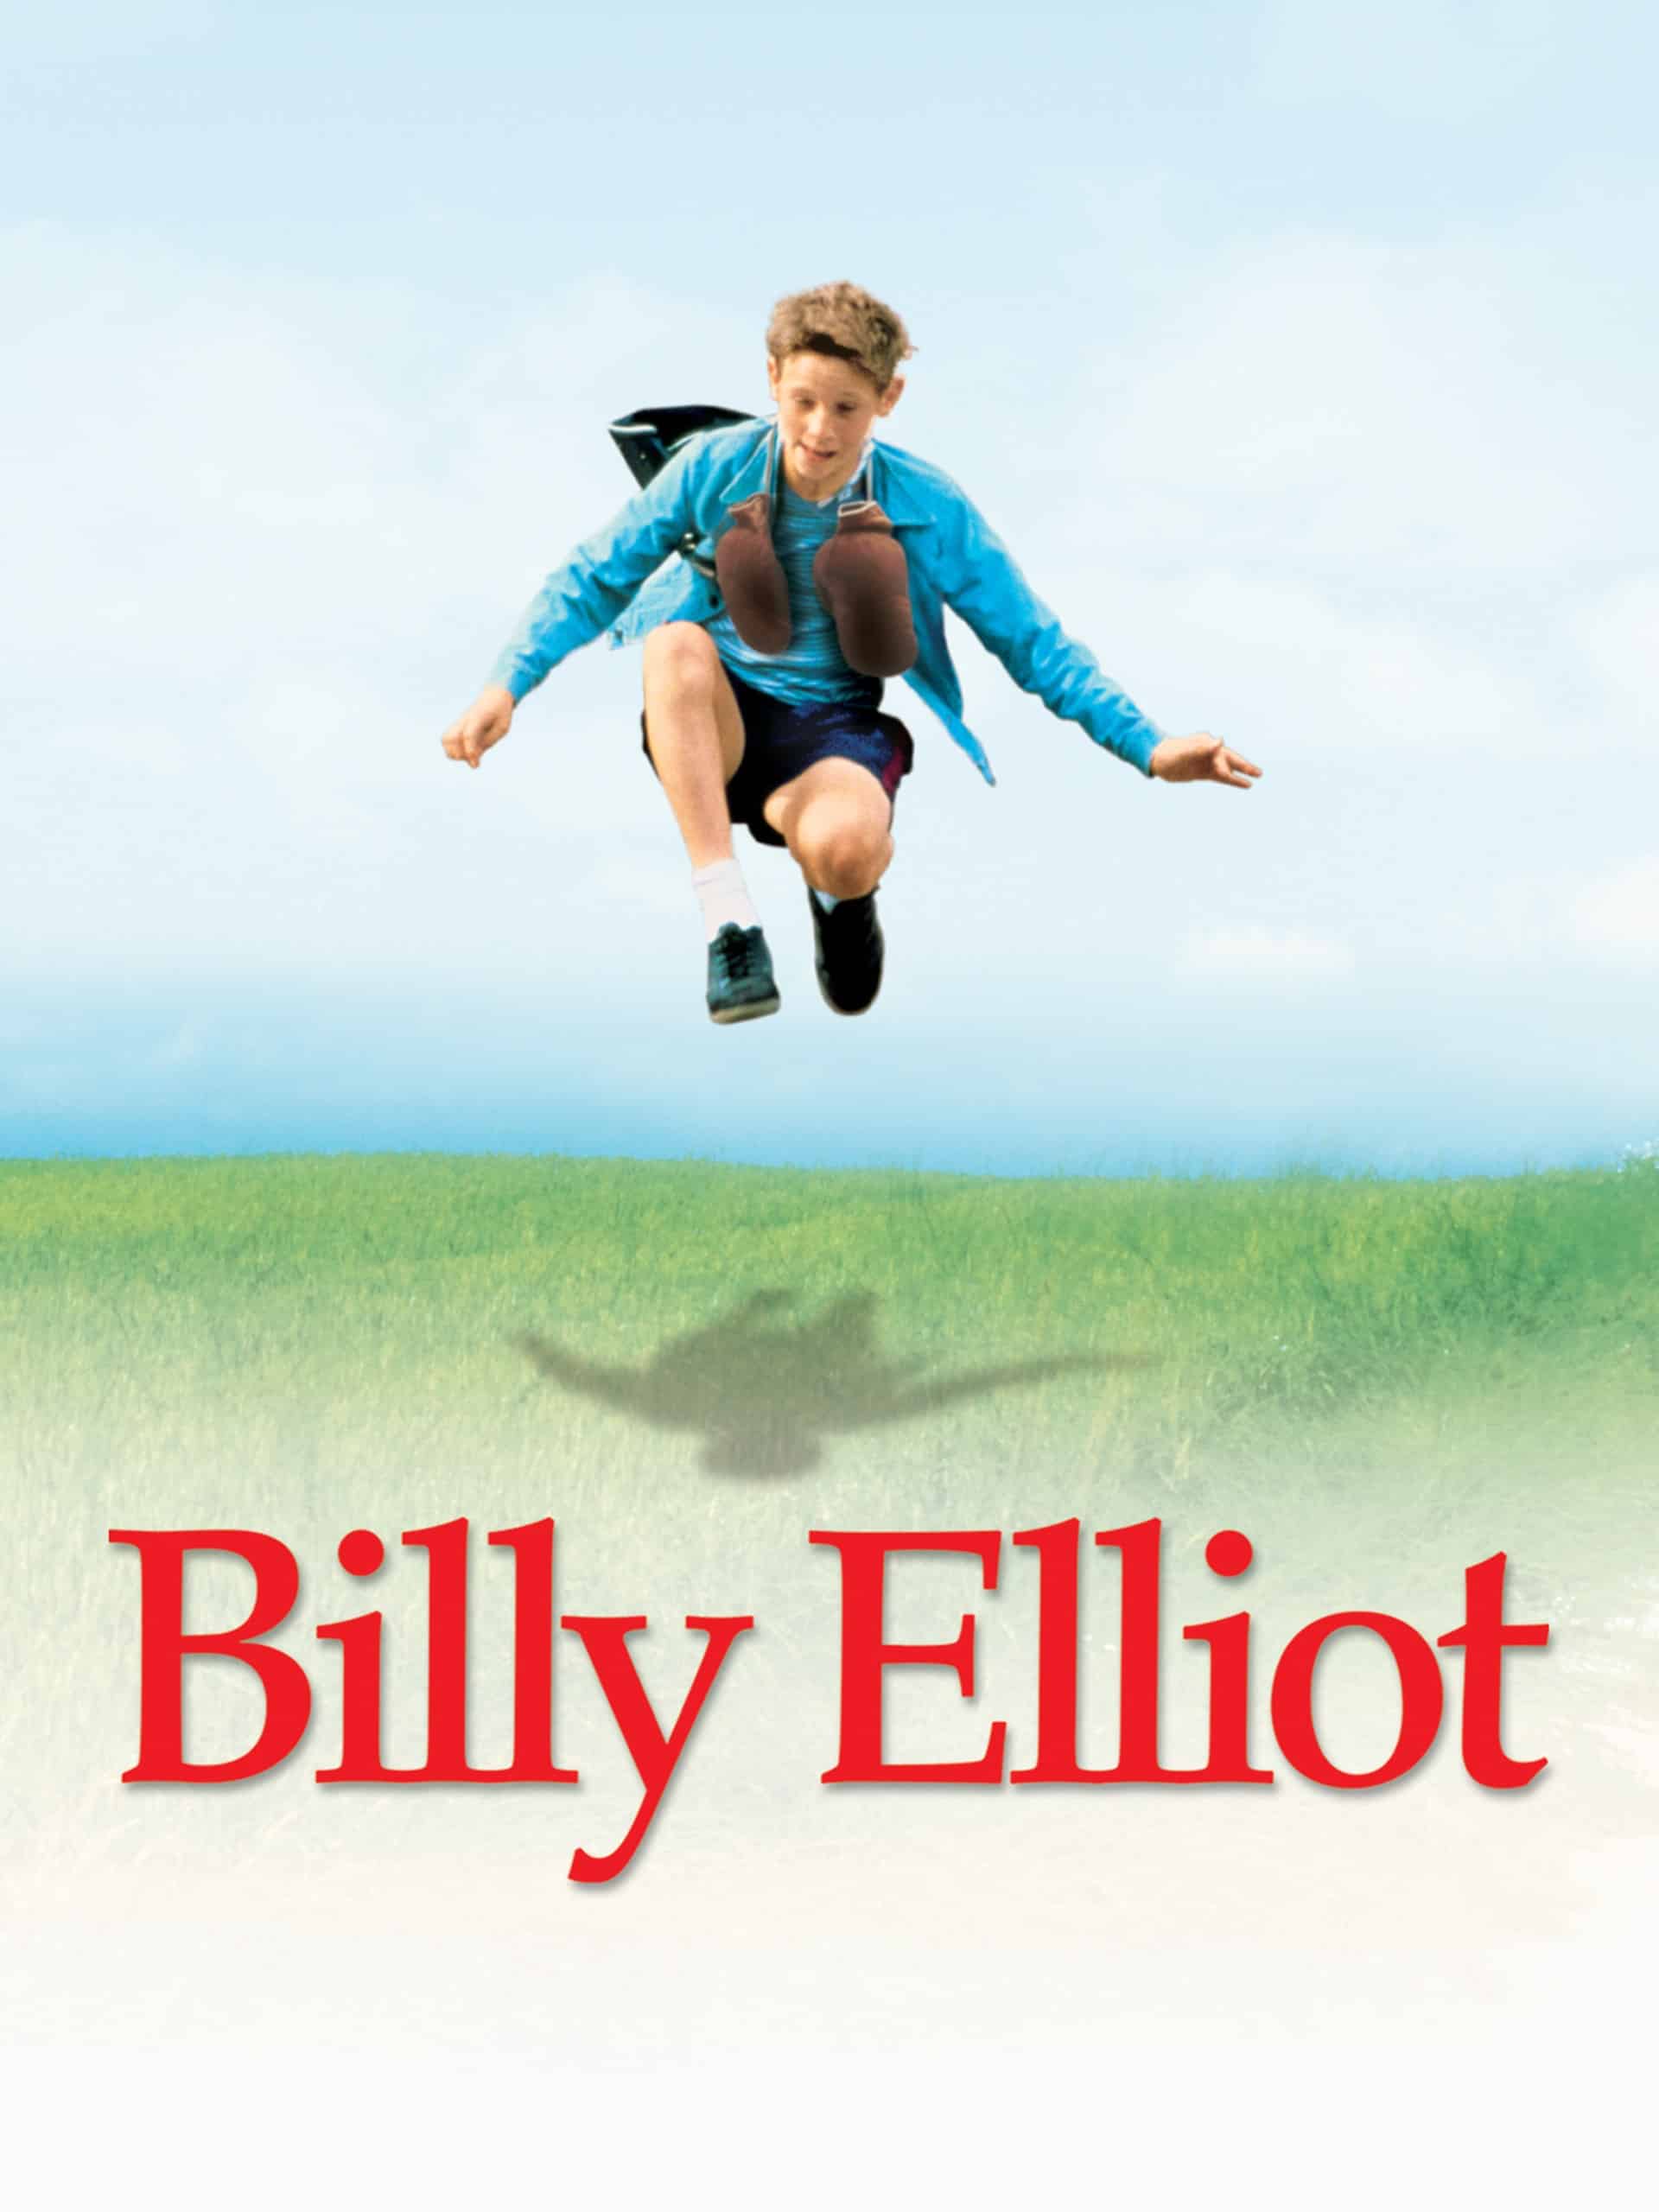 Billy Elliot – I Will Dance (Stephen Daldry, 2000)